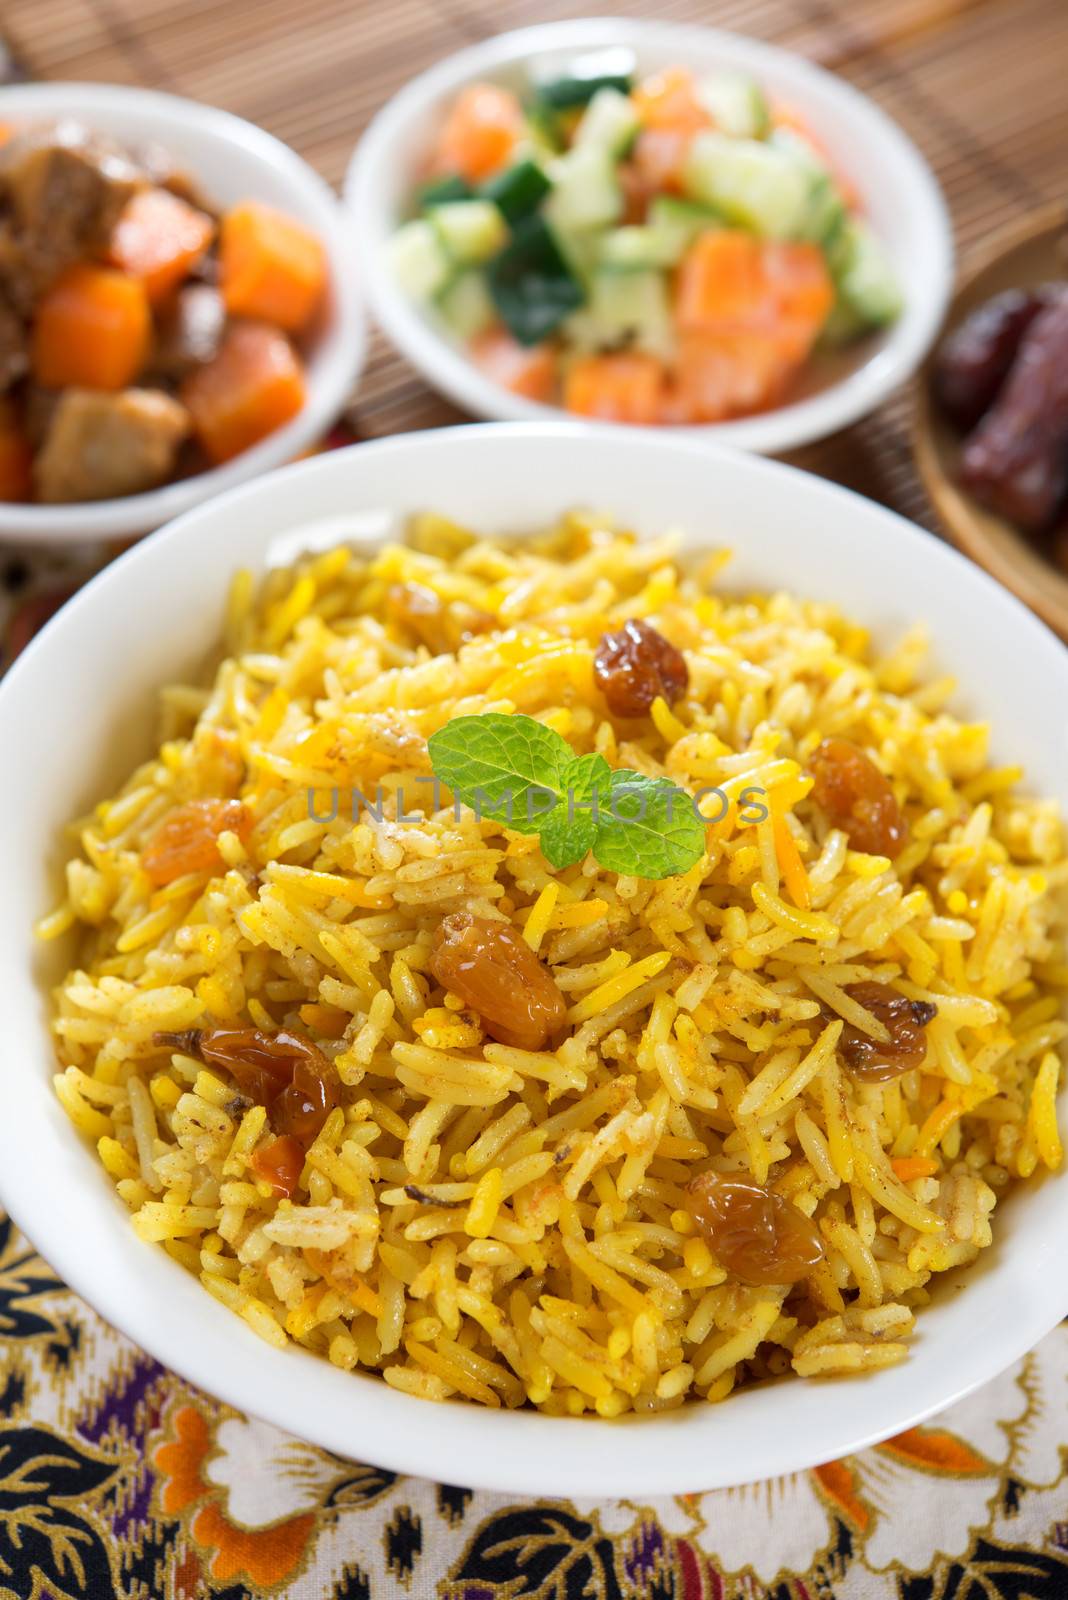 Arab rice by szefei